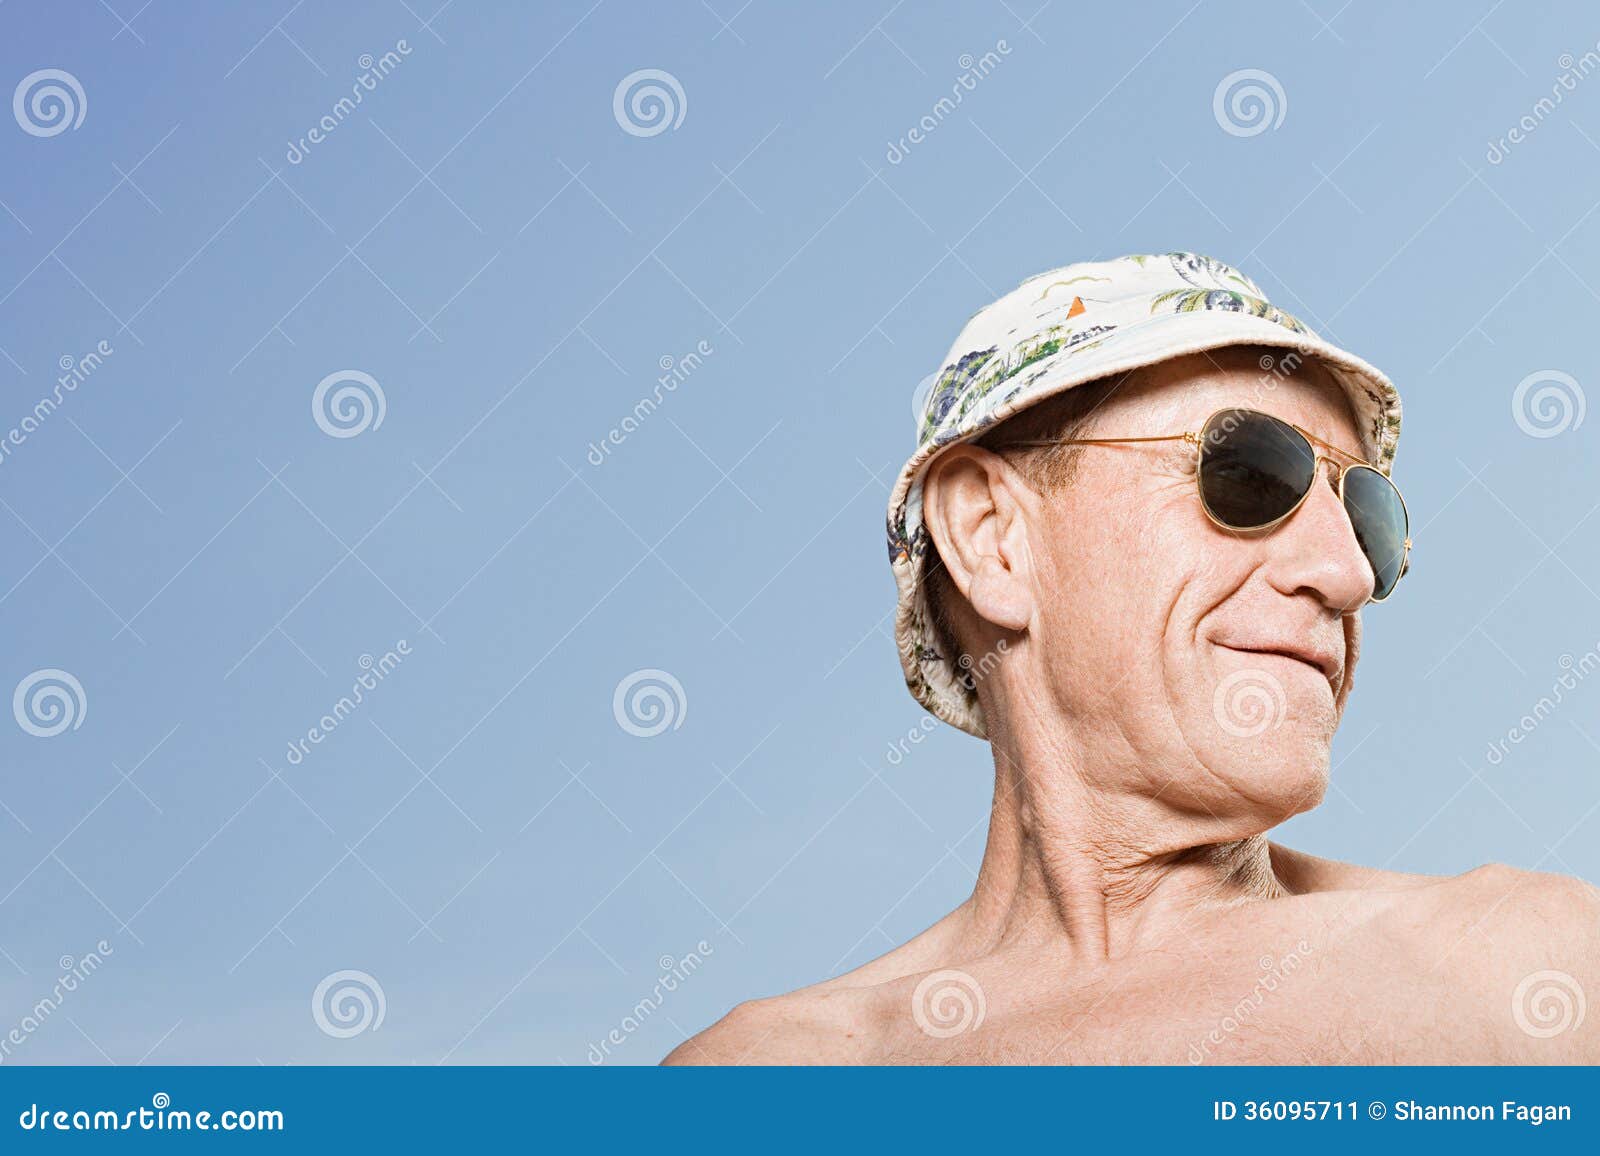 man wearing sunhat and sunglasses